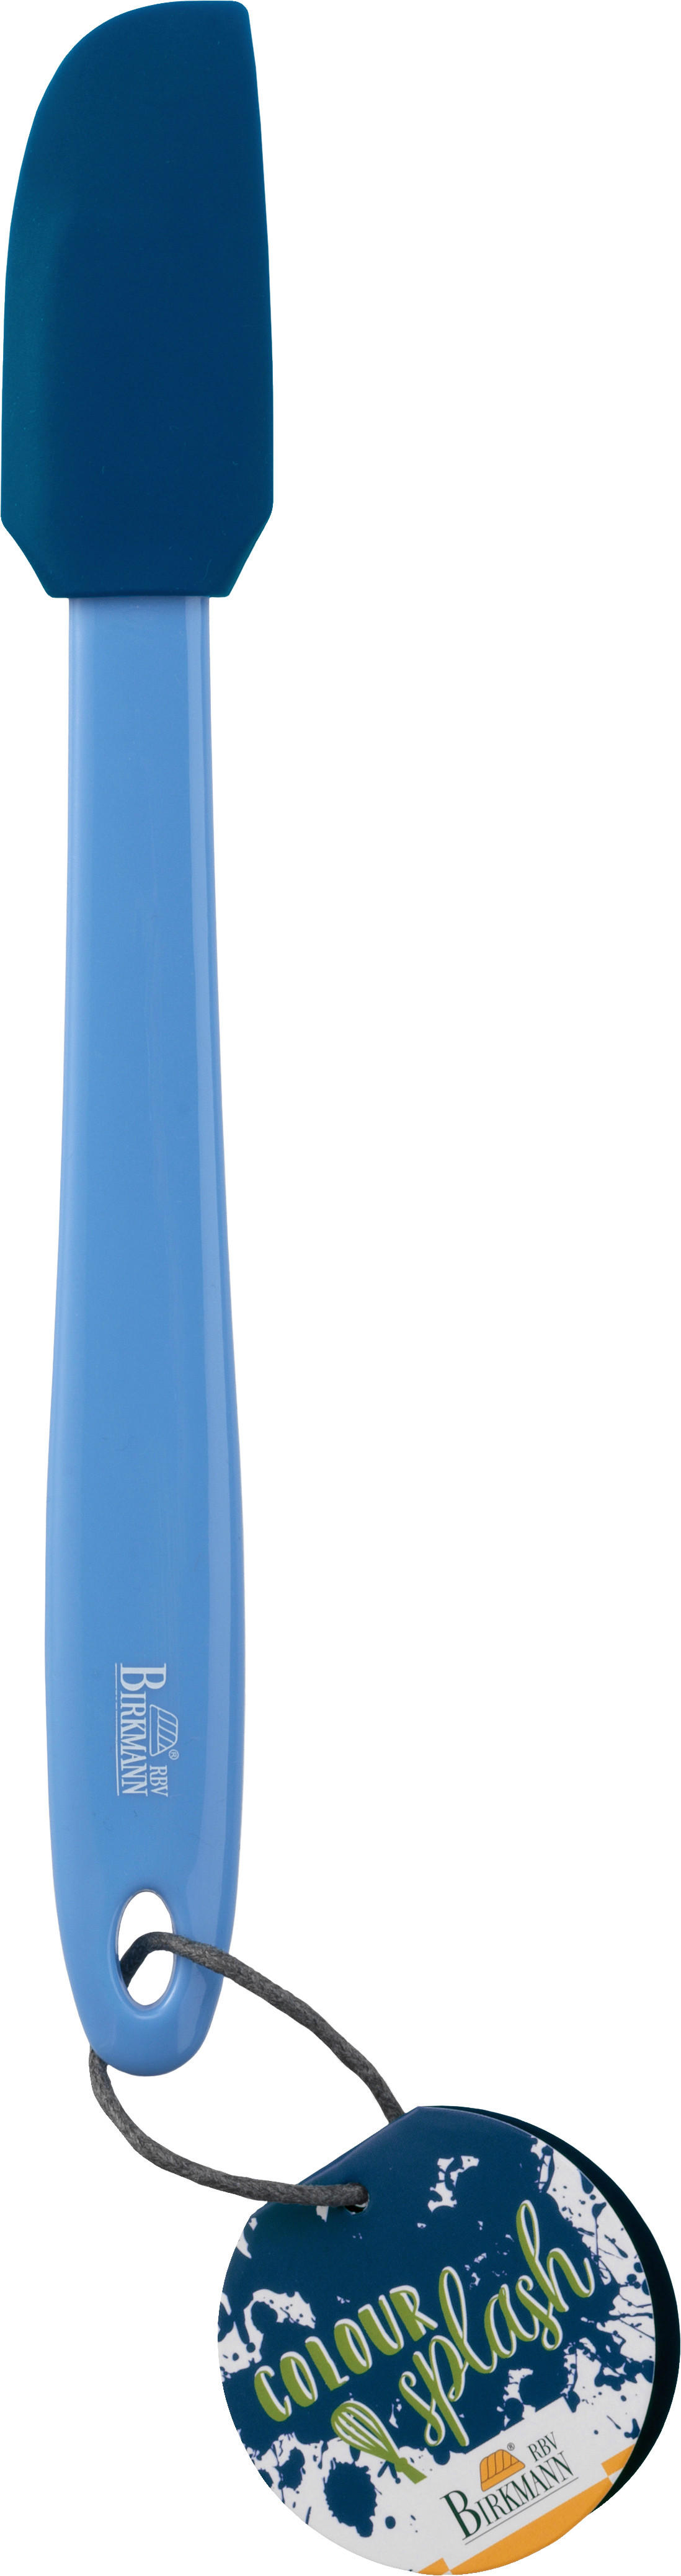 TEIGSCHABER - Blau, Basics, Kunststoff (3,5/27cm) - Birkmann